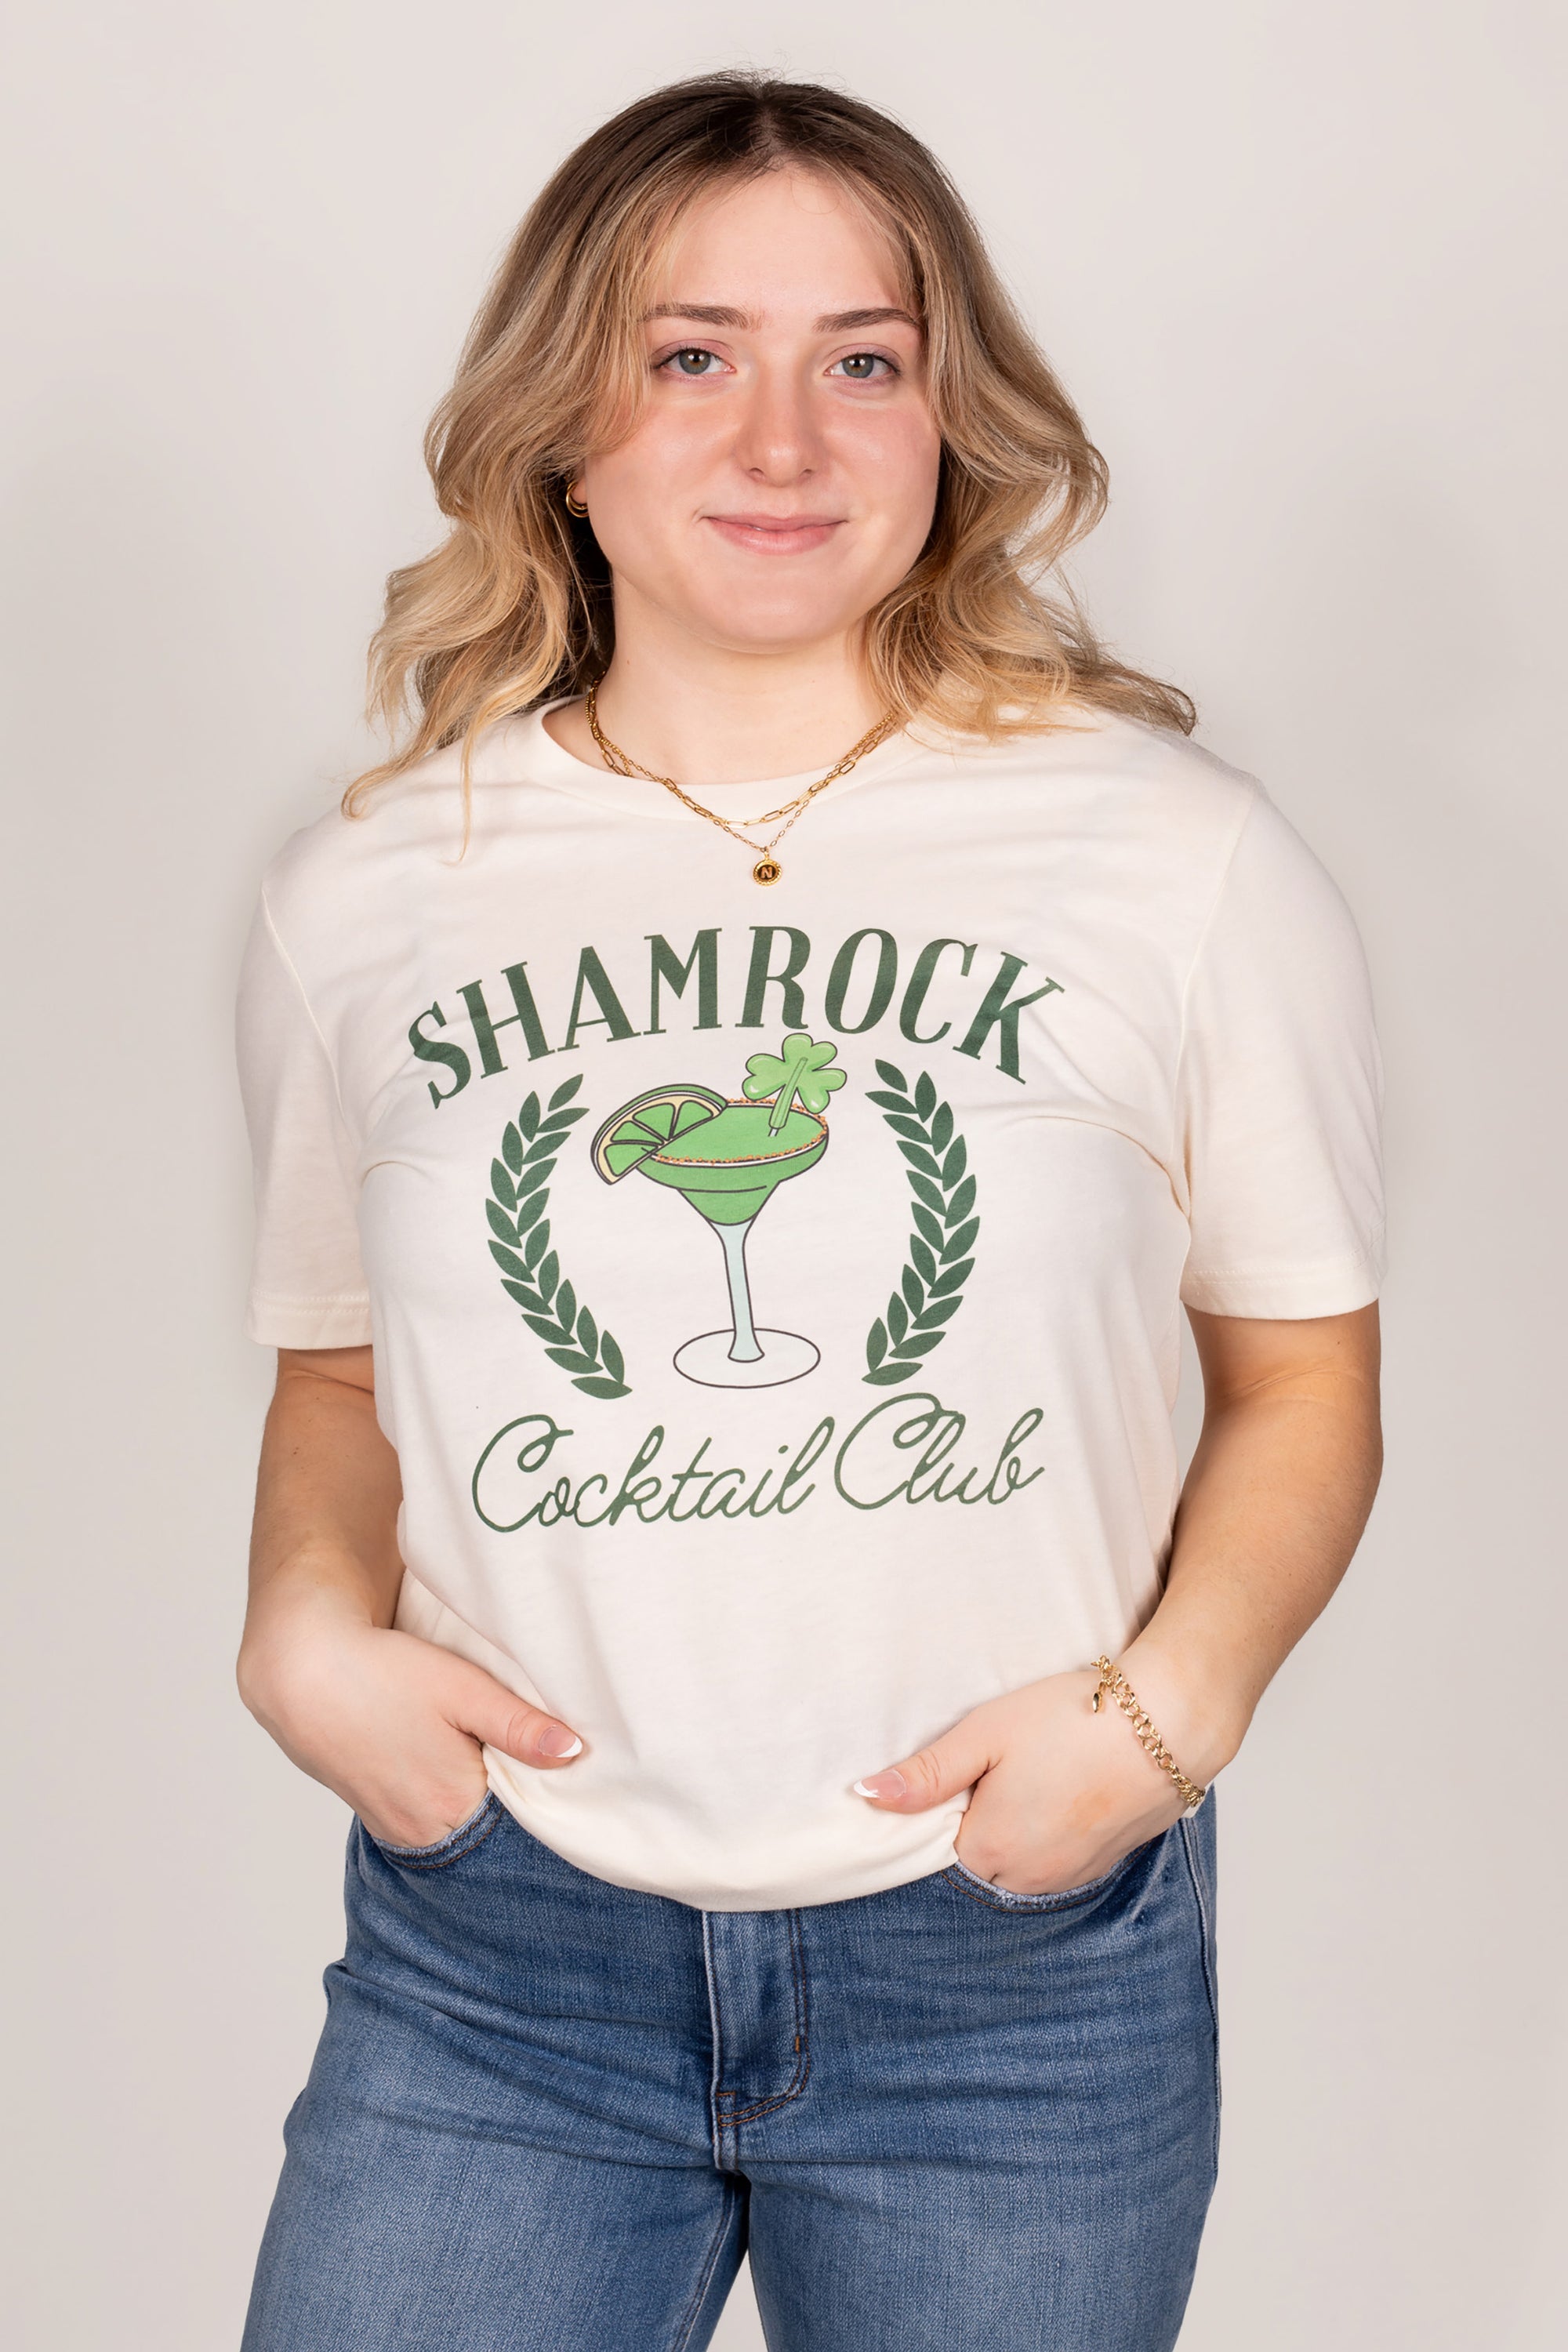 Shamrock Cocktail Club Tee - FINAL SALE